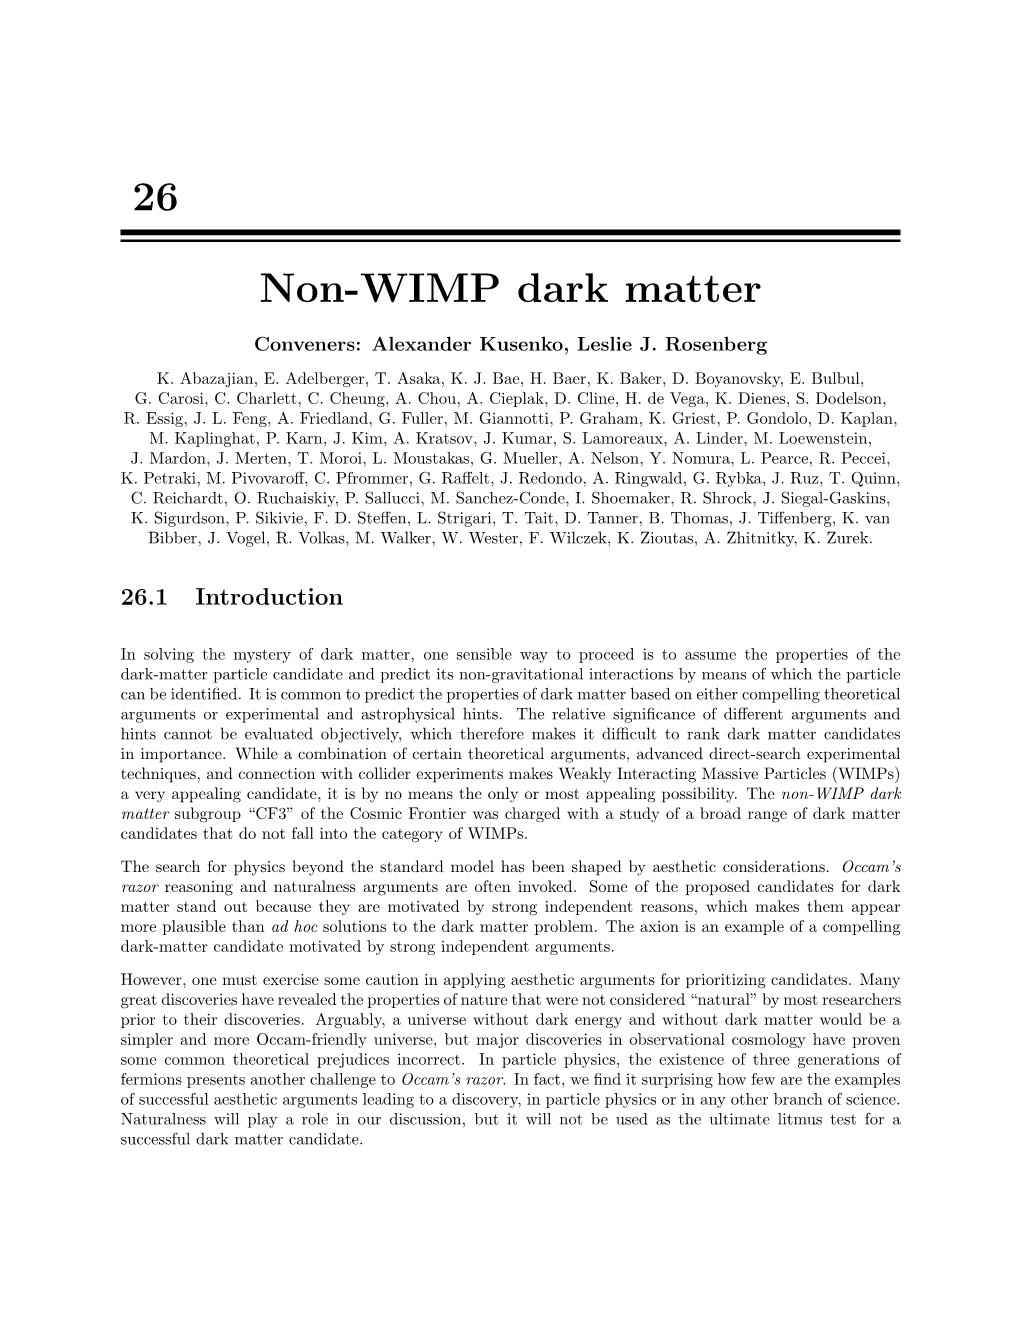 Non-WIMP Dark Matter